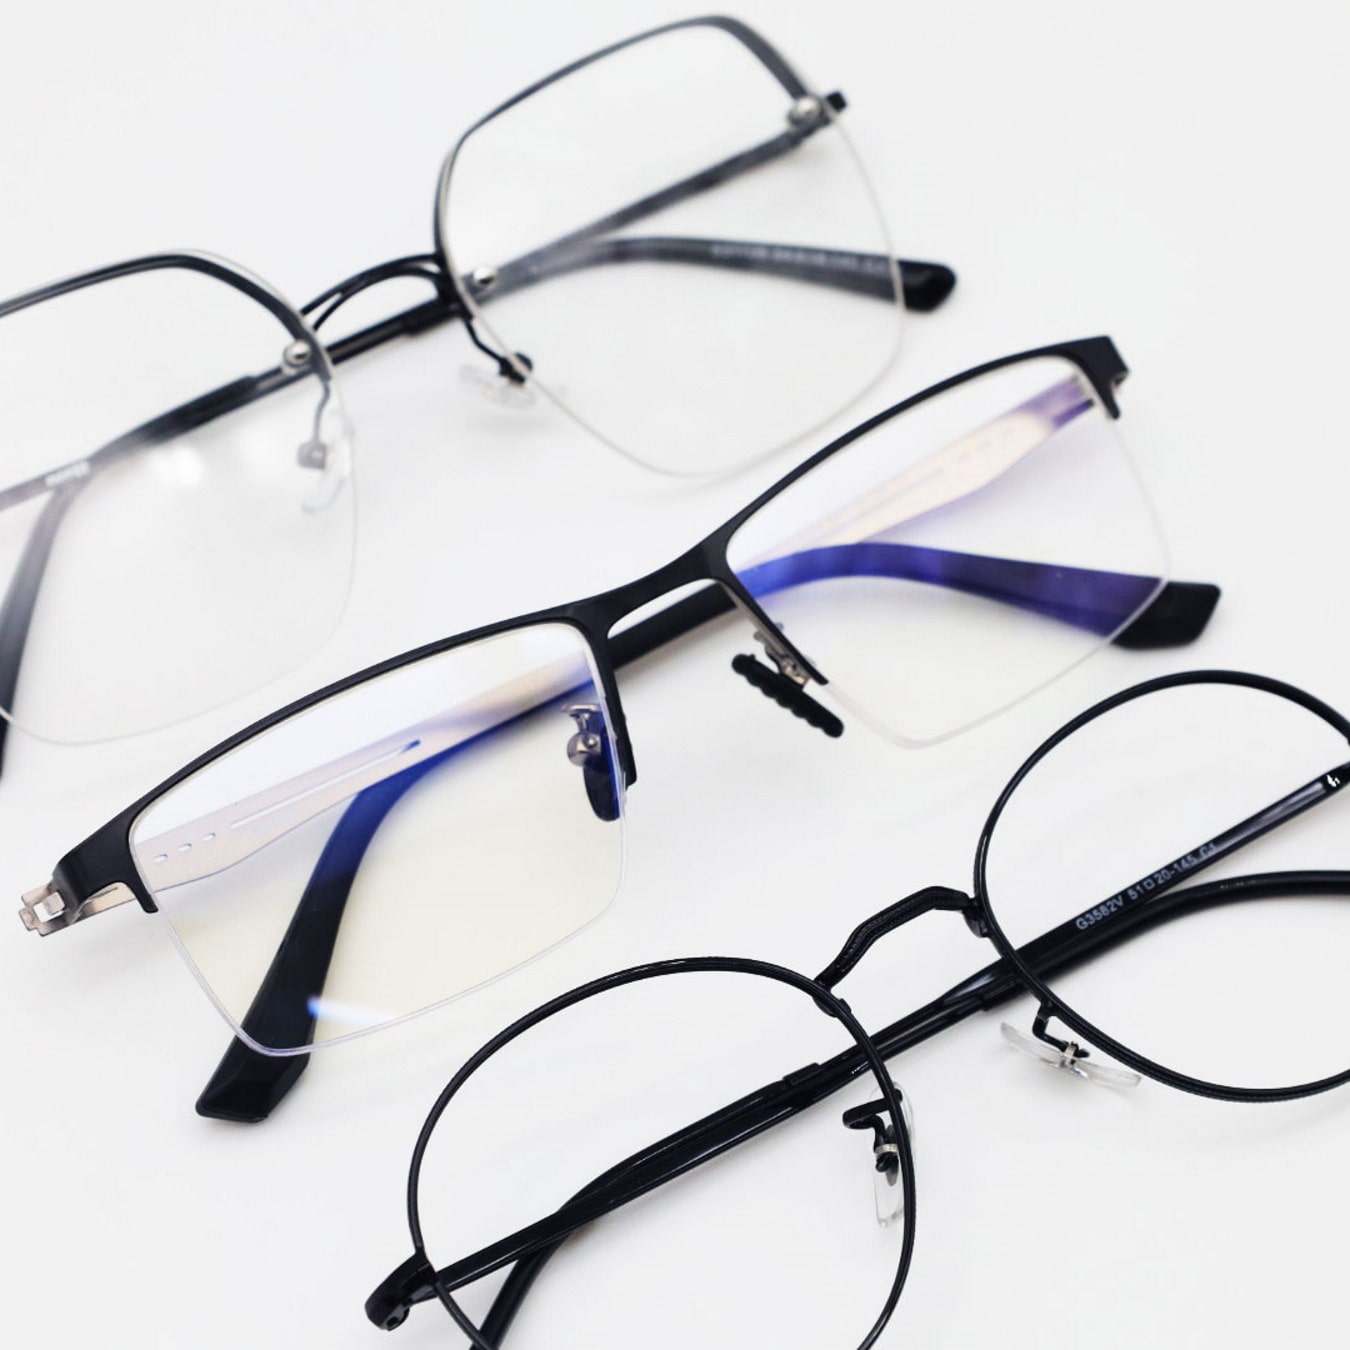 3 pairs of eyeglasses of different rim types